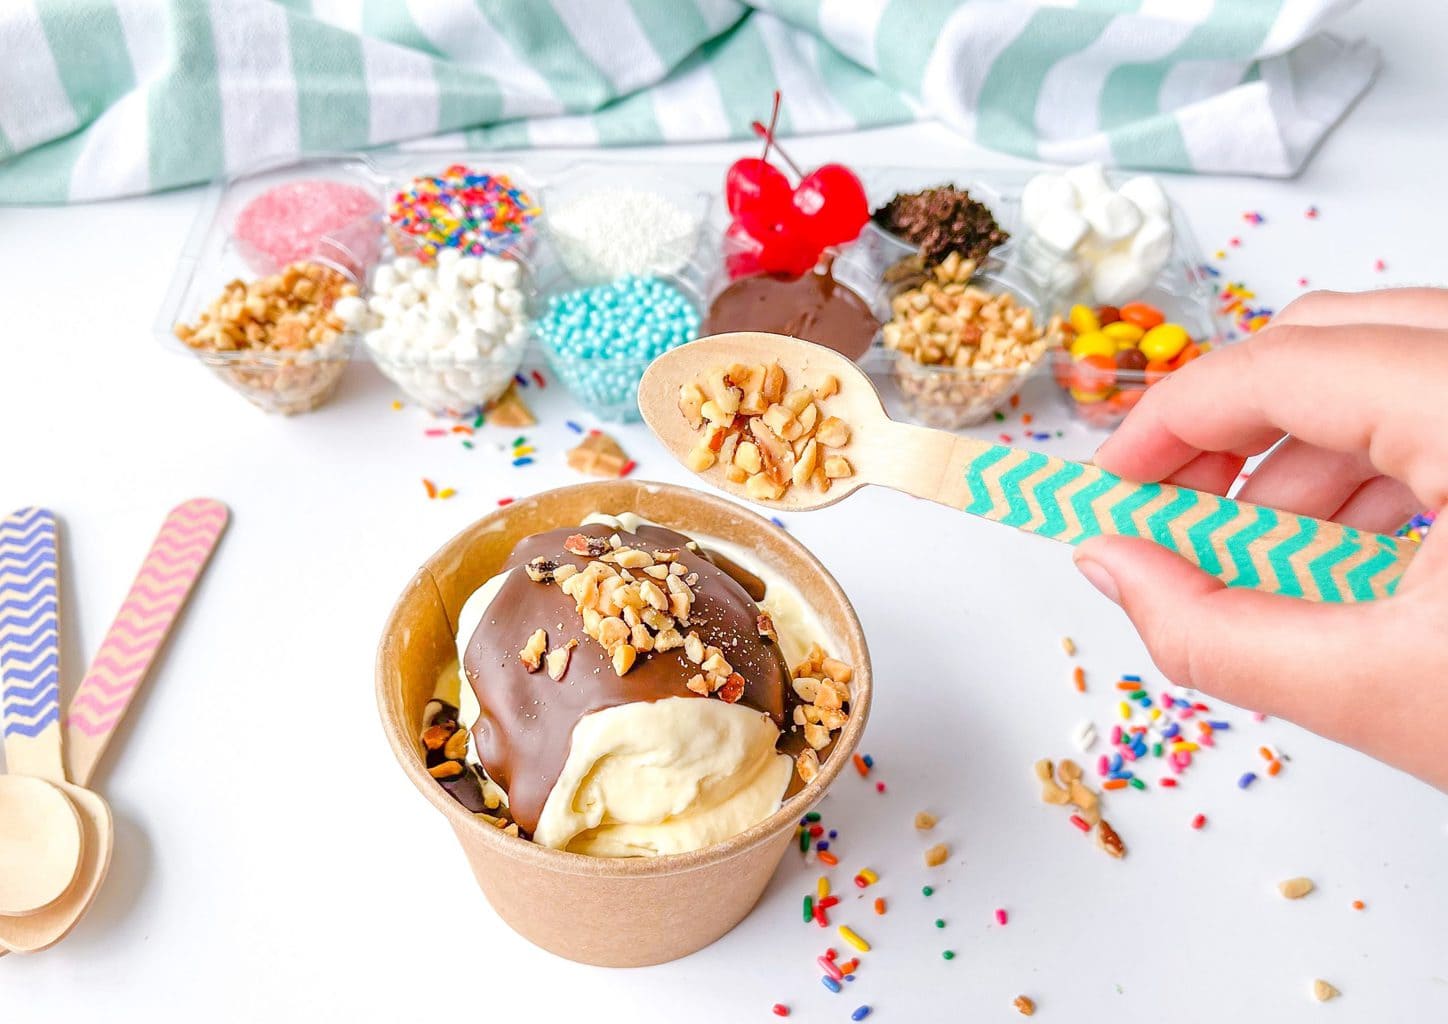 Vanilla ice cream sundae with toppings